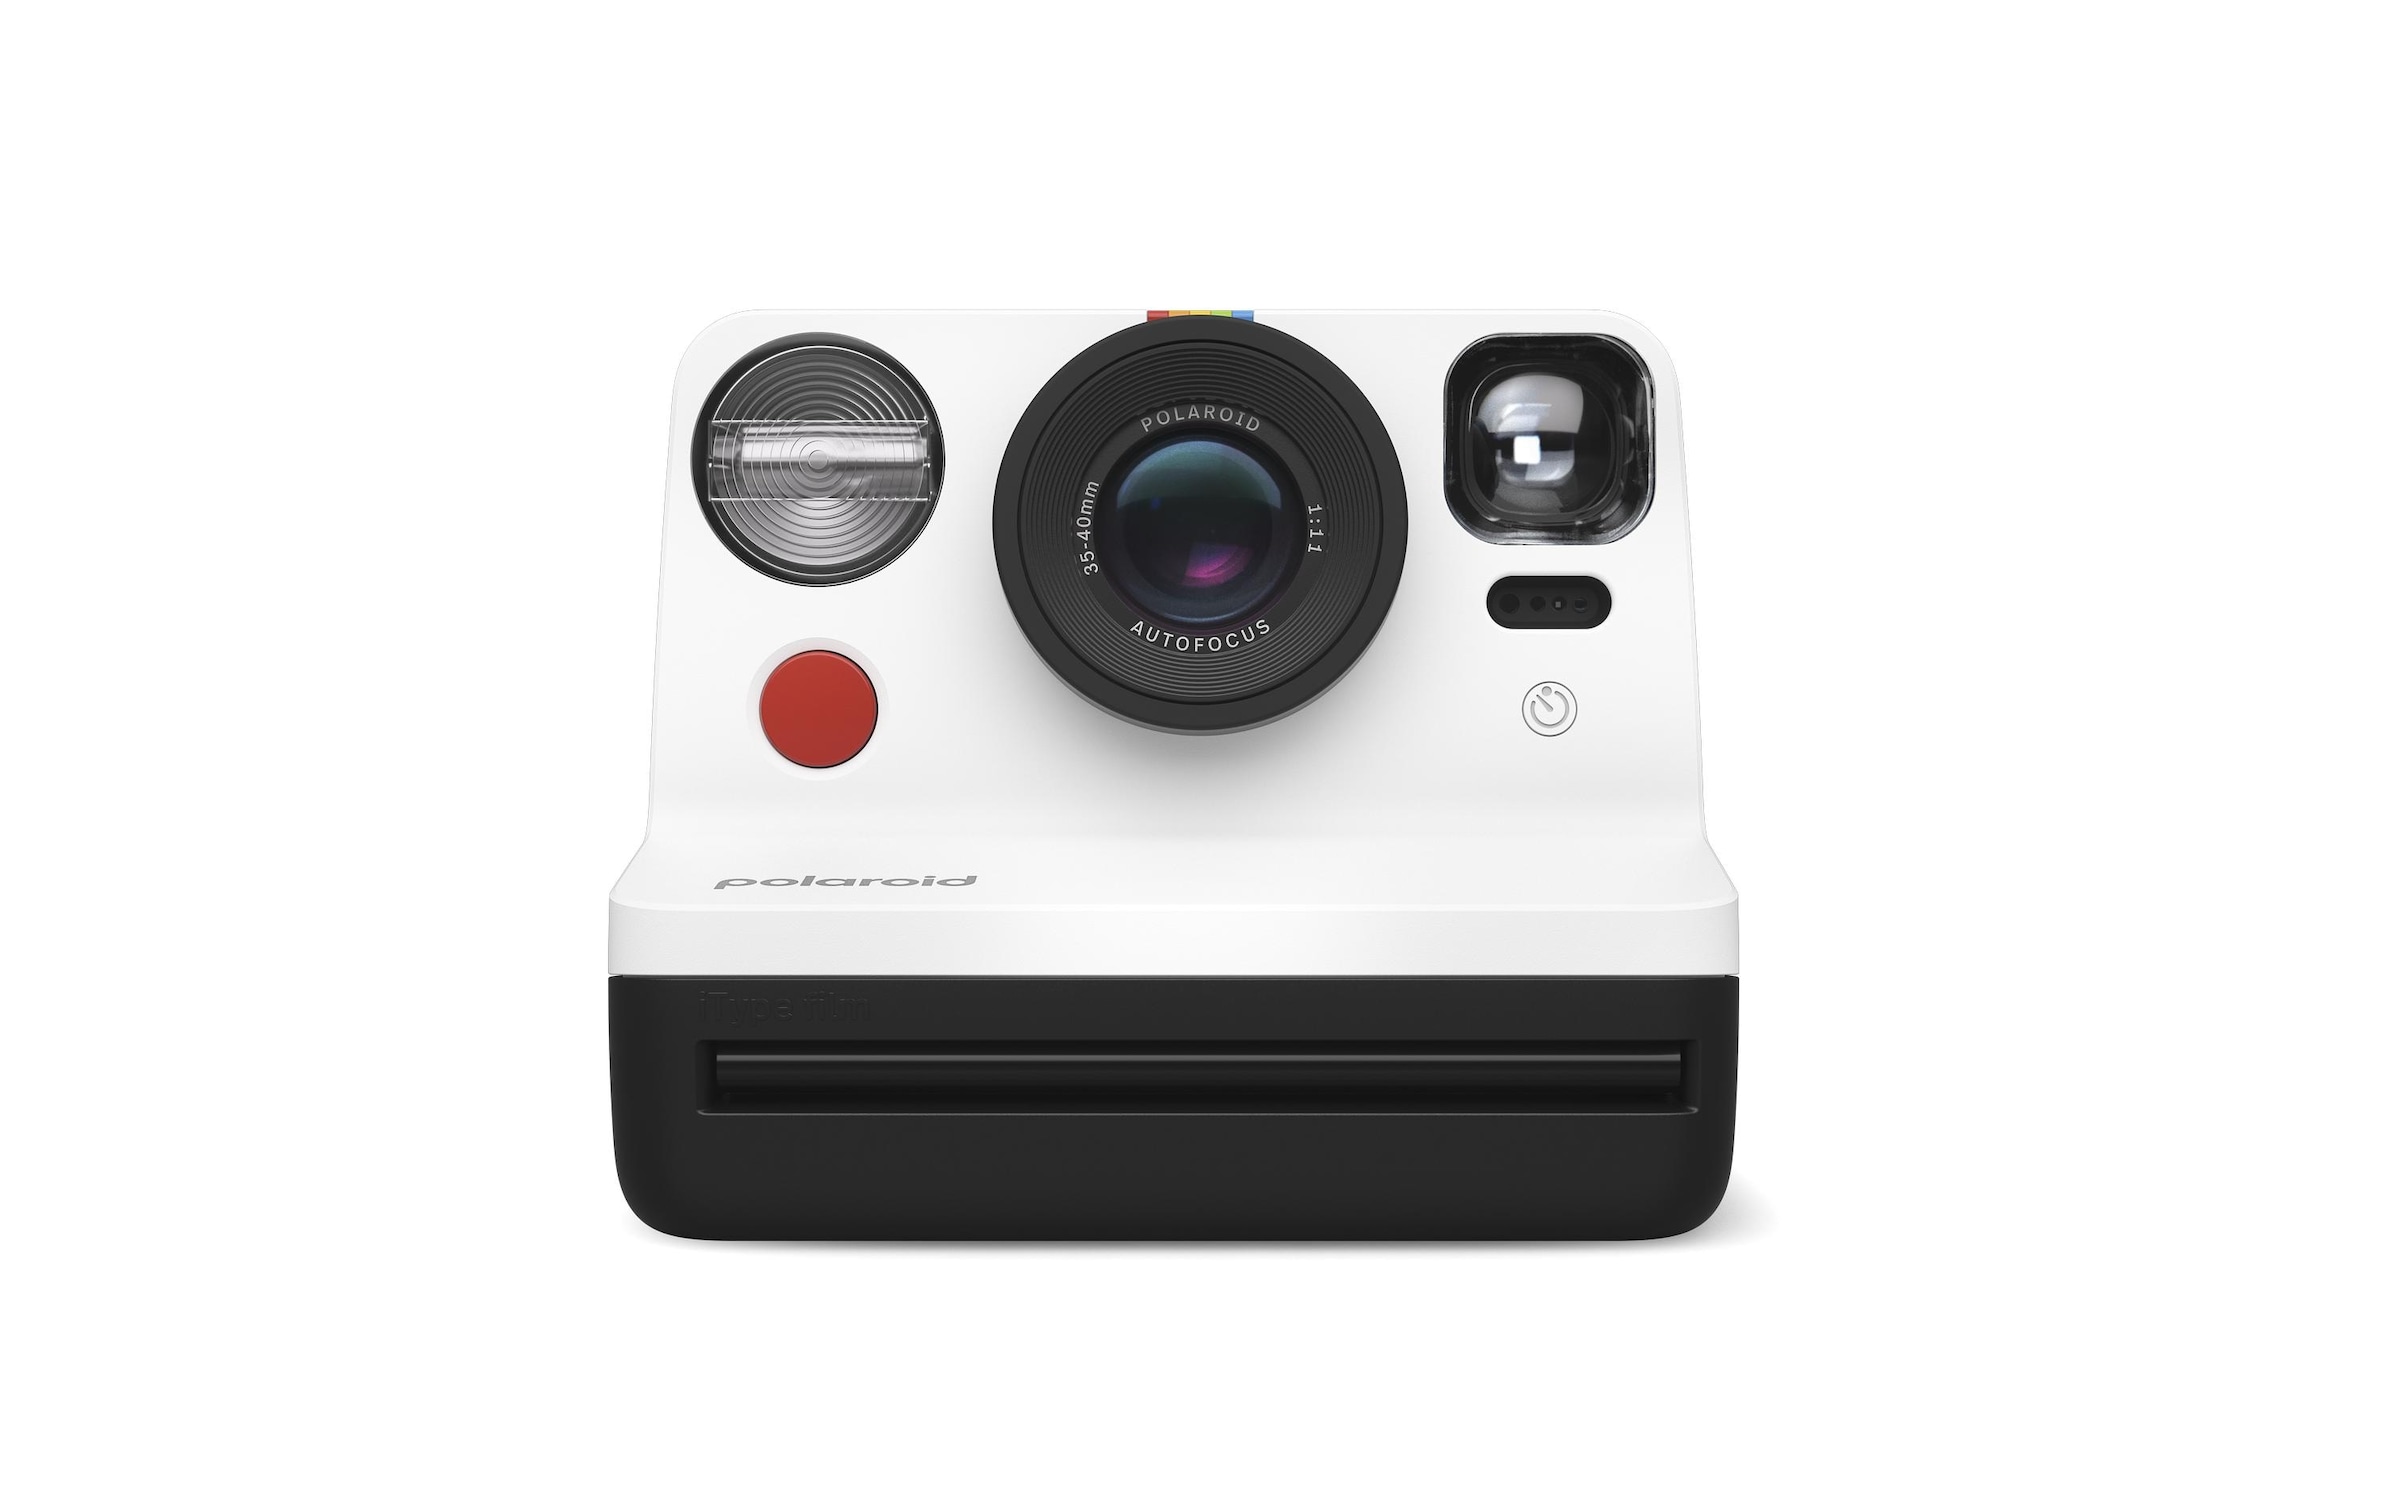 Polaroid Sofortbildkamera »Everything Box«